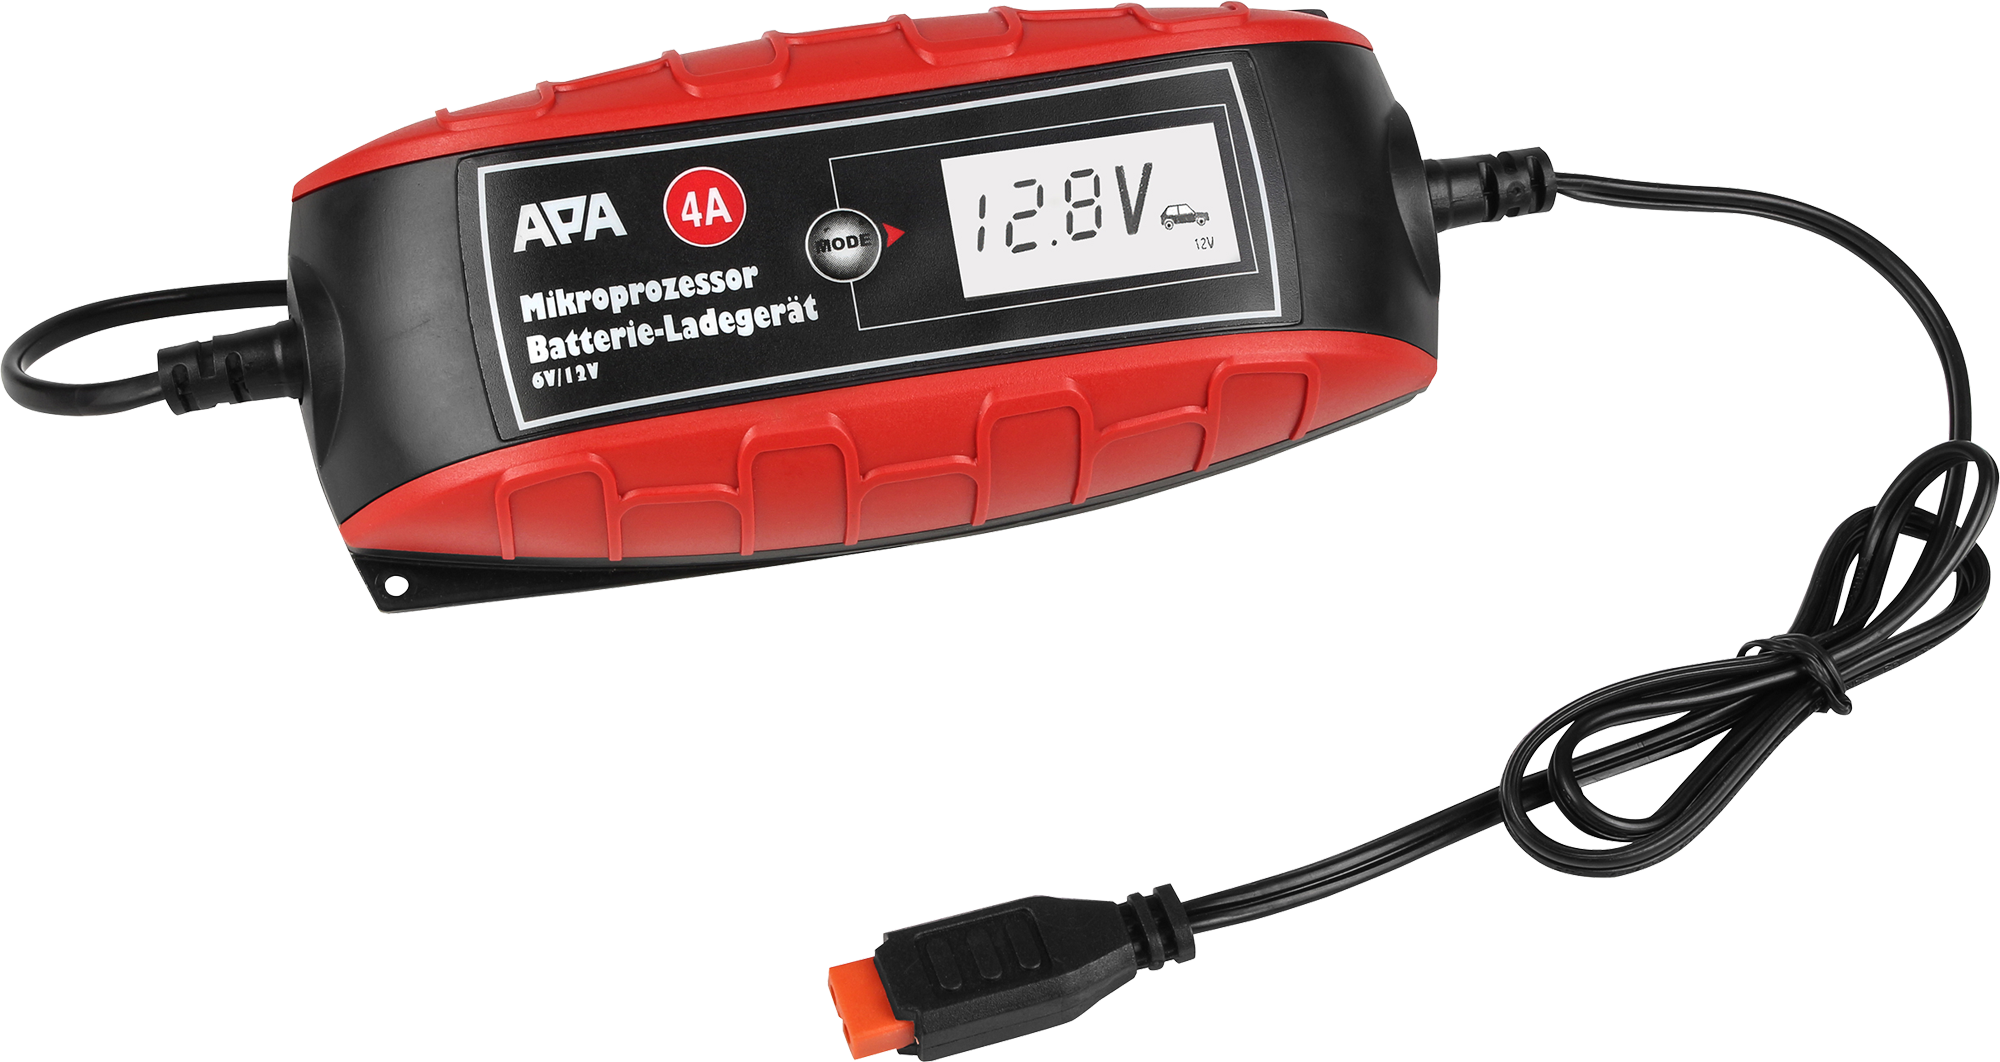 Apa Mikroprozessor Batterie-Ladegerät, 9-stufig, Ladeerhaltungsfunktion, 6/ 12V, 4A jetzt bestellen!